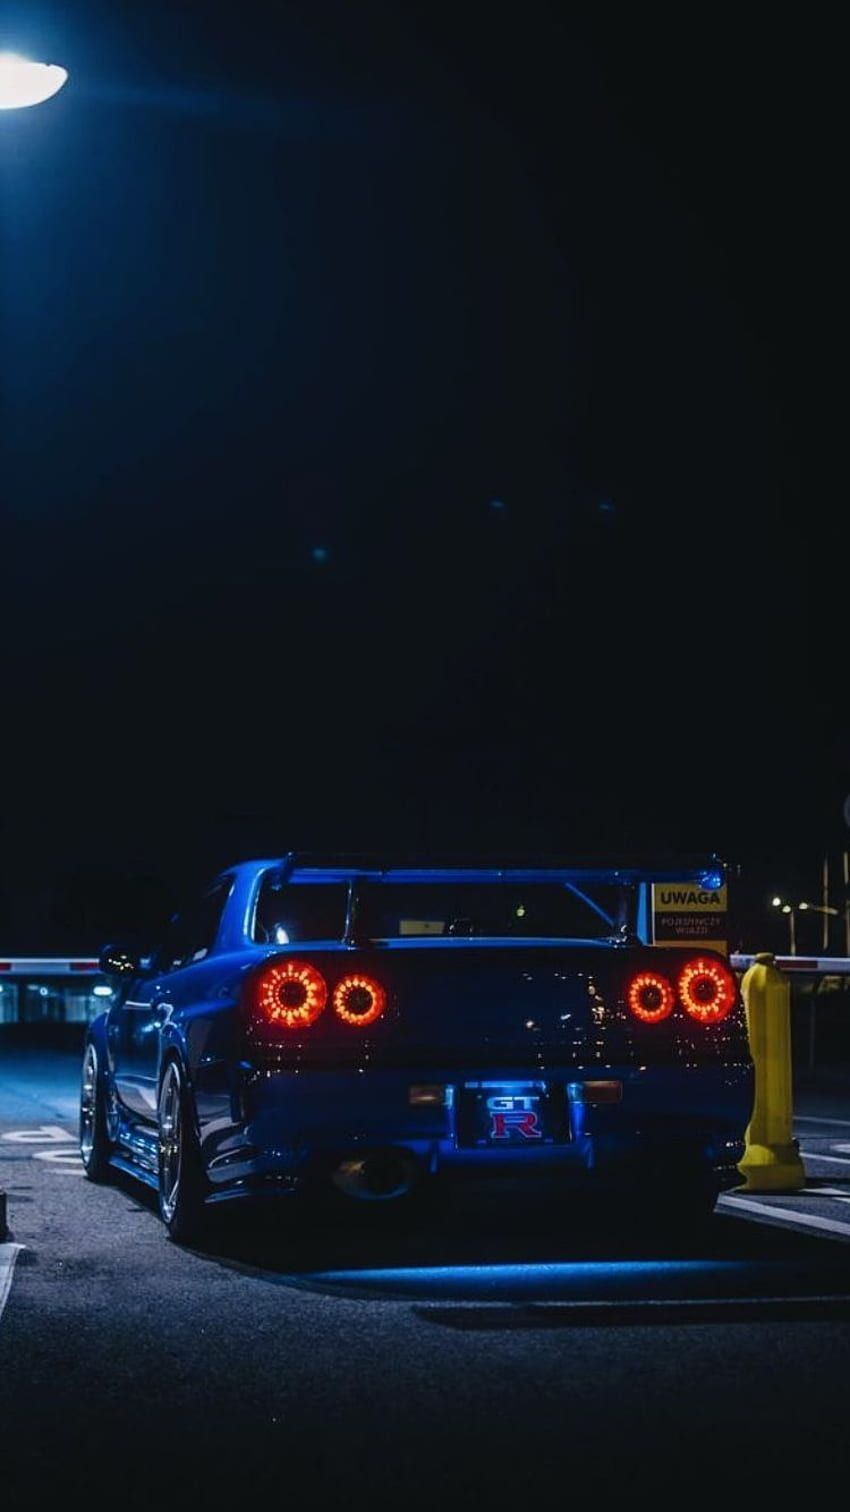 A blue sports car parked in the dark - Nissan Skyline